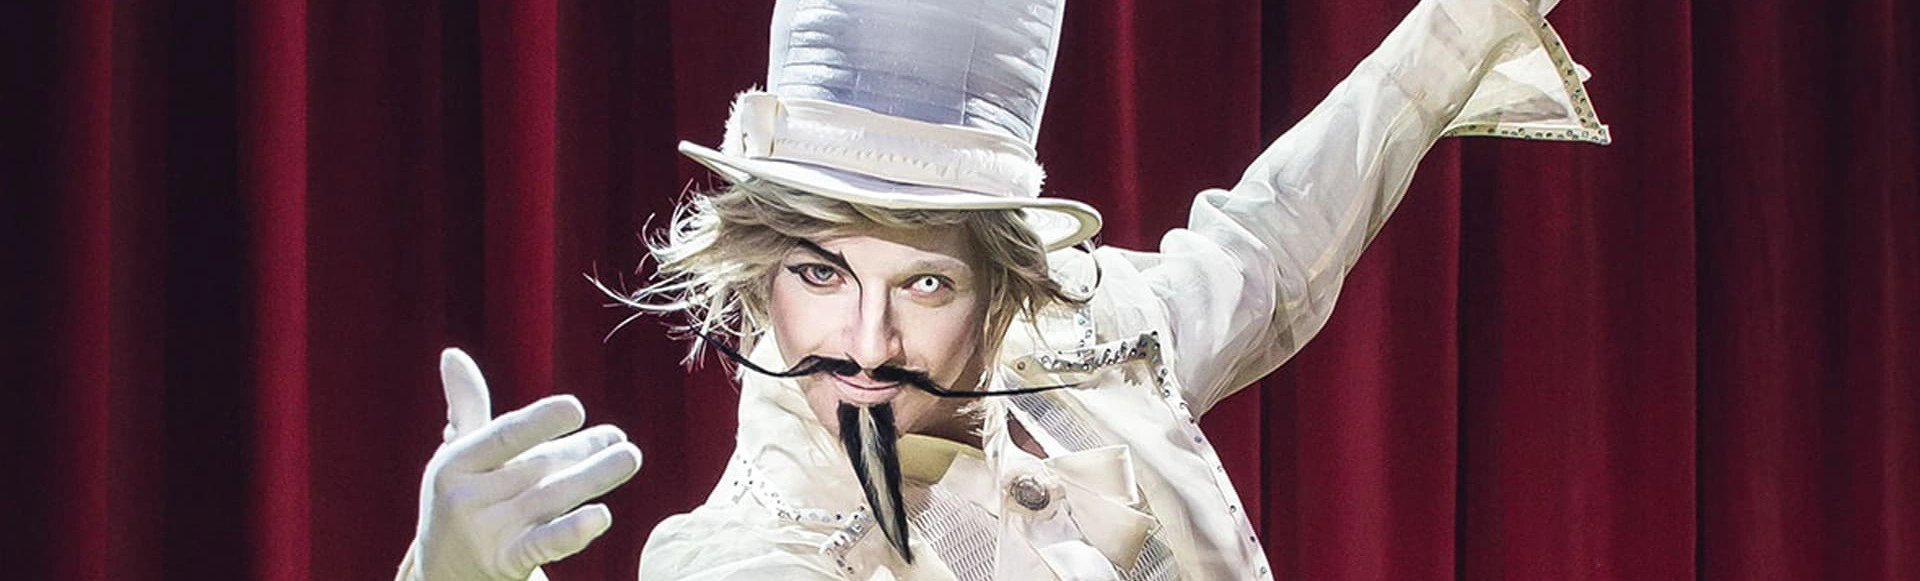 «Принцесса цирка» на сцене Московского театра мюзикла
